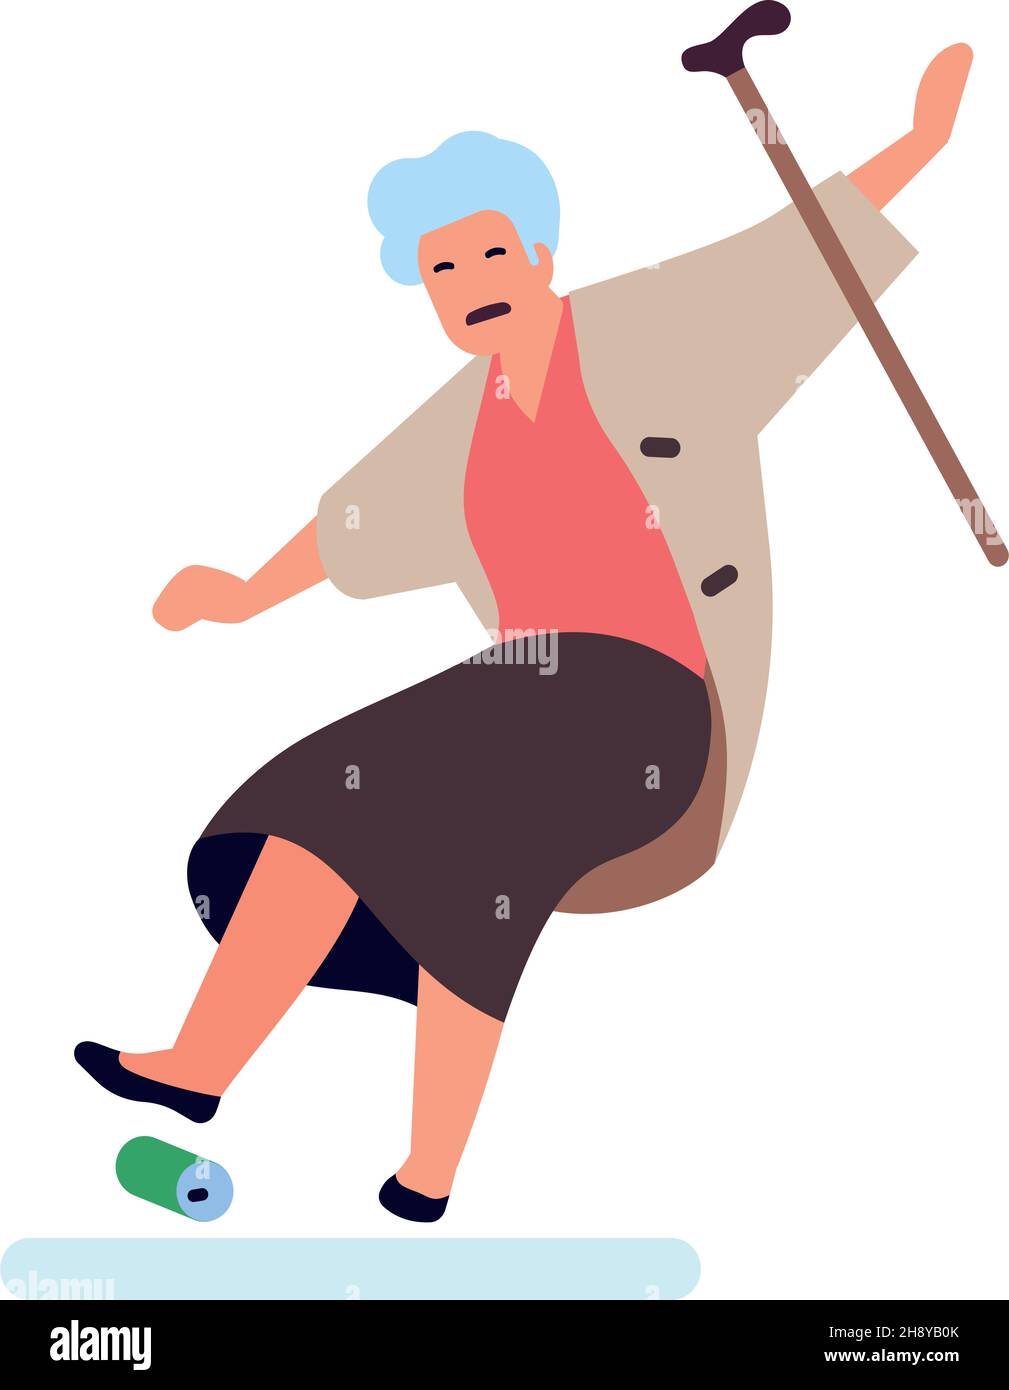 Old woman falling down. Senior stumble over trash and loosing balance Stock Vector